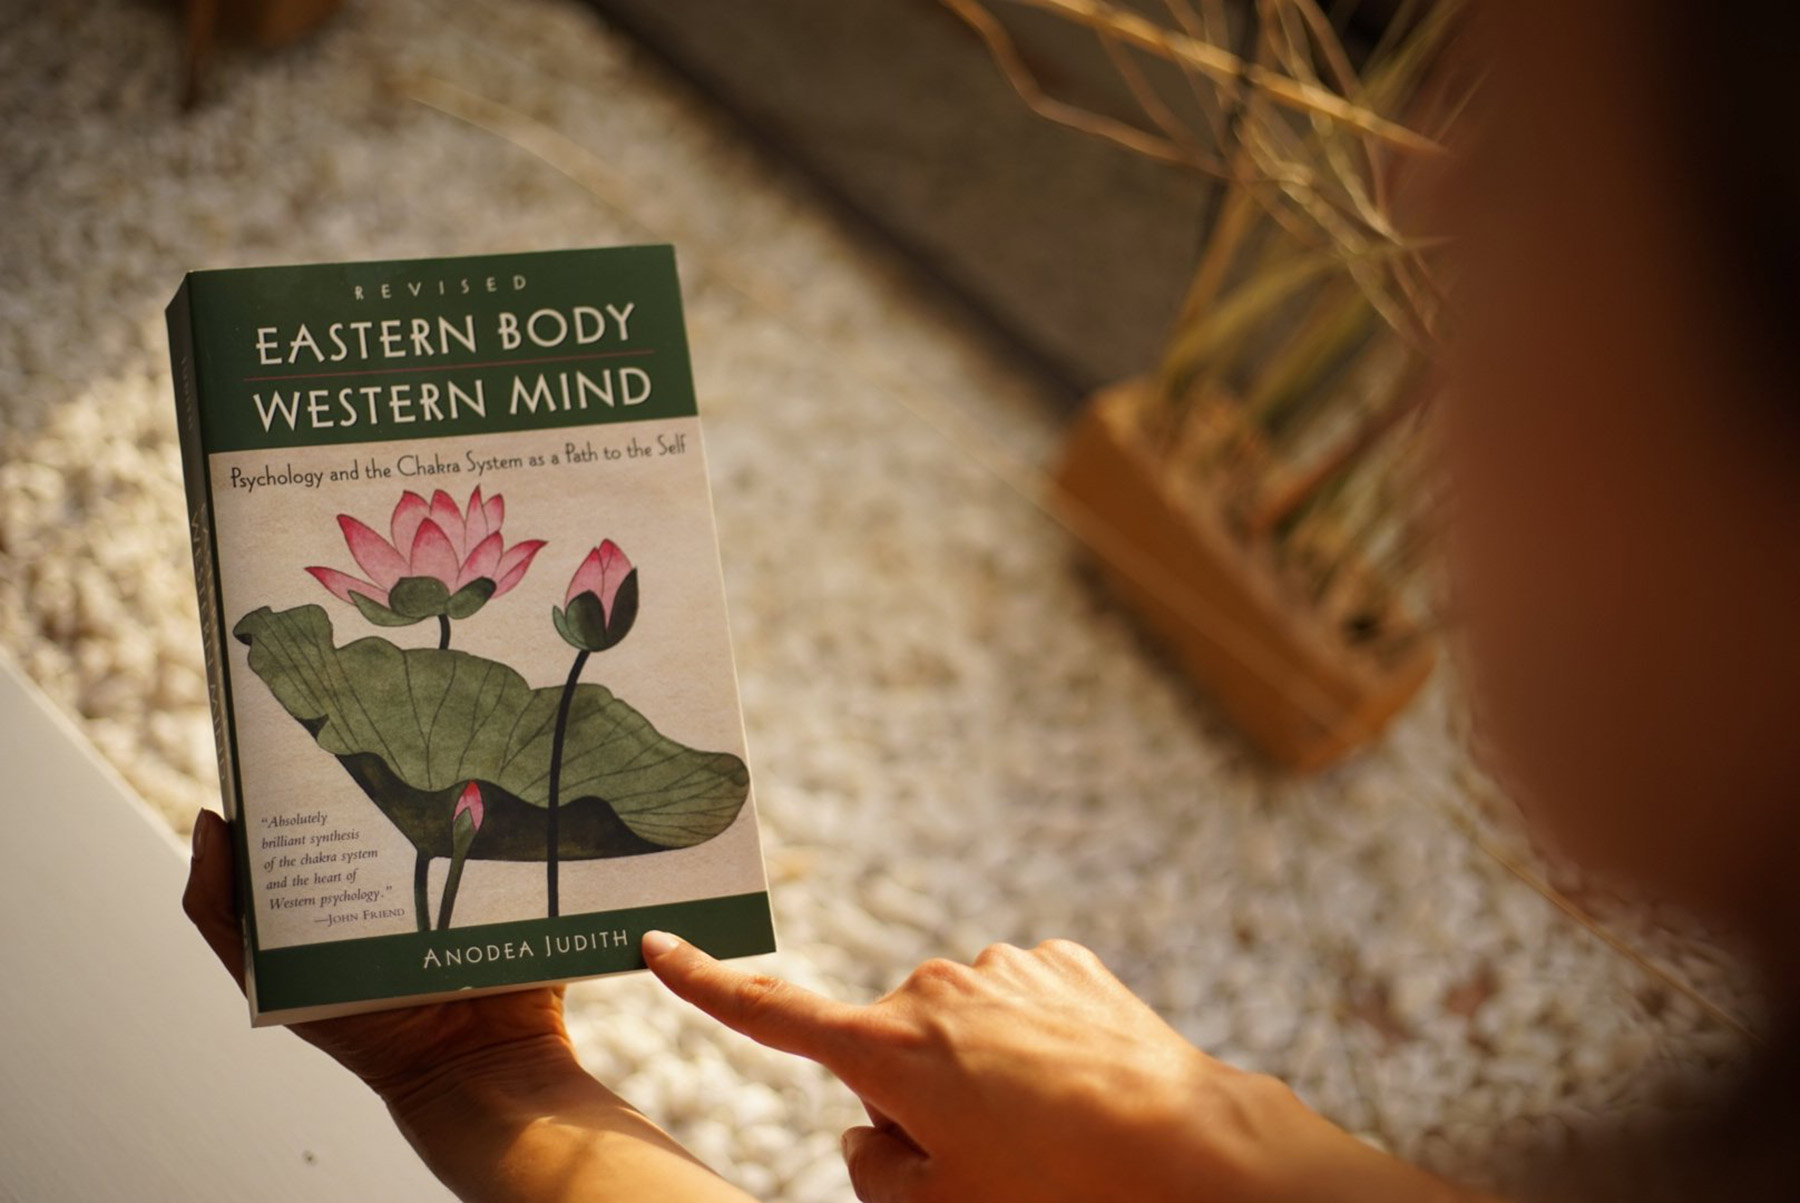 brett larkin reading material eastern body western mind in 300 hour yoga teacher training